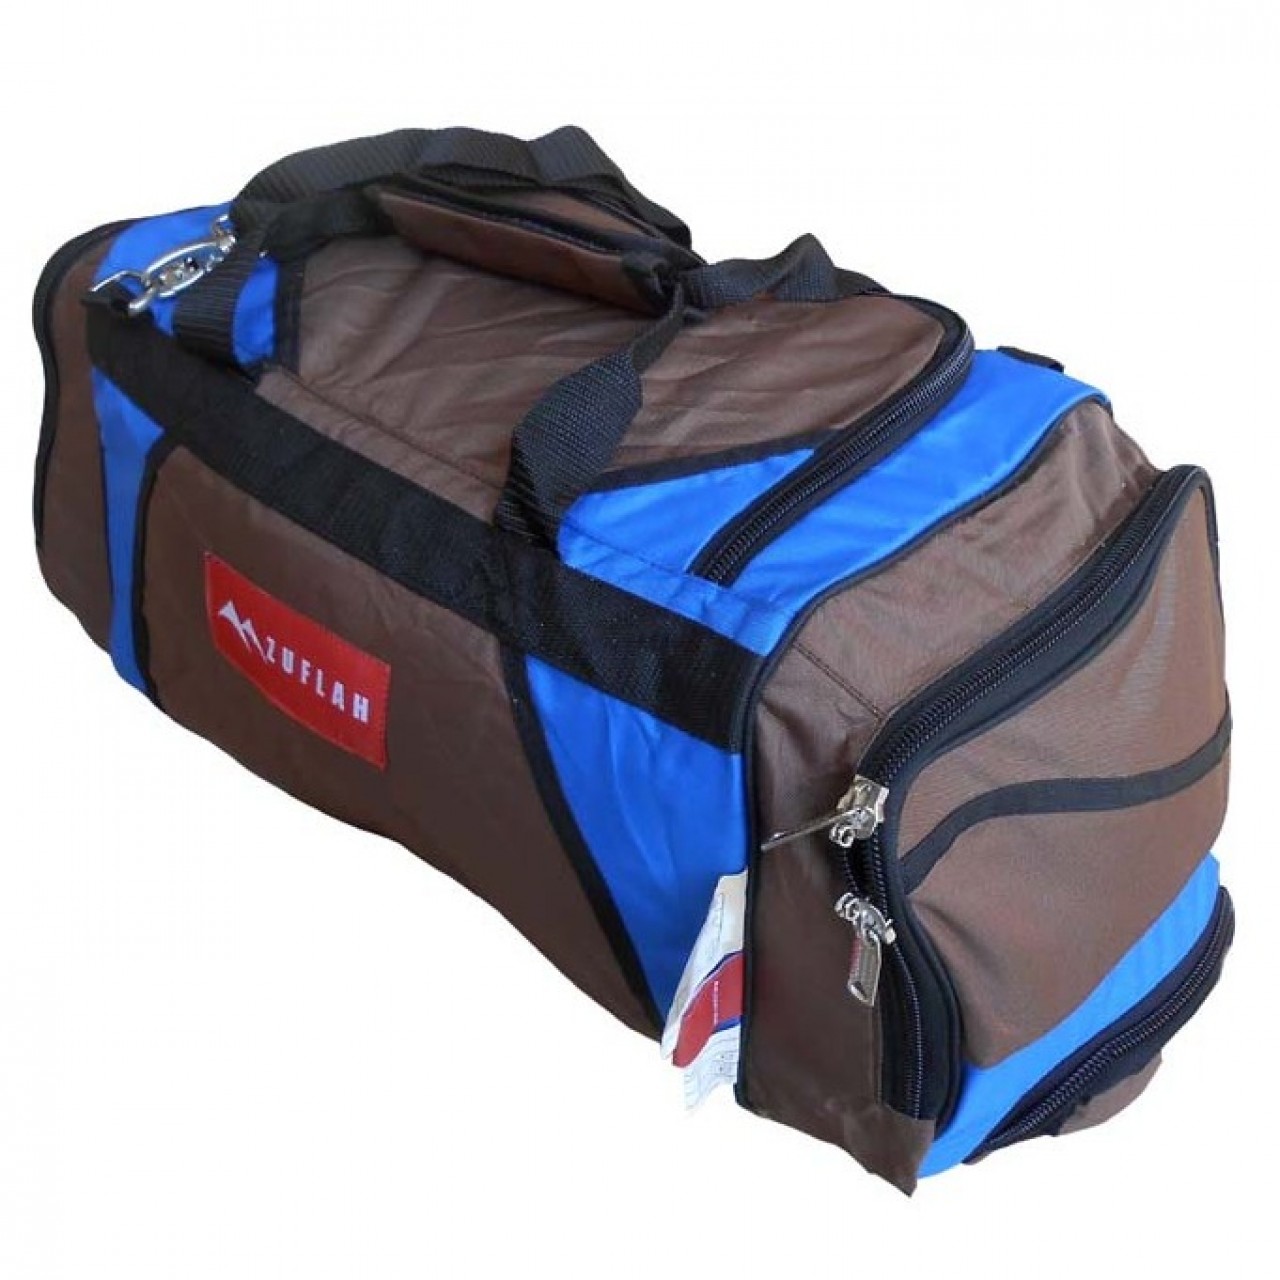 Travel Bag - Medium - Brown & Royal Blue